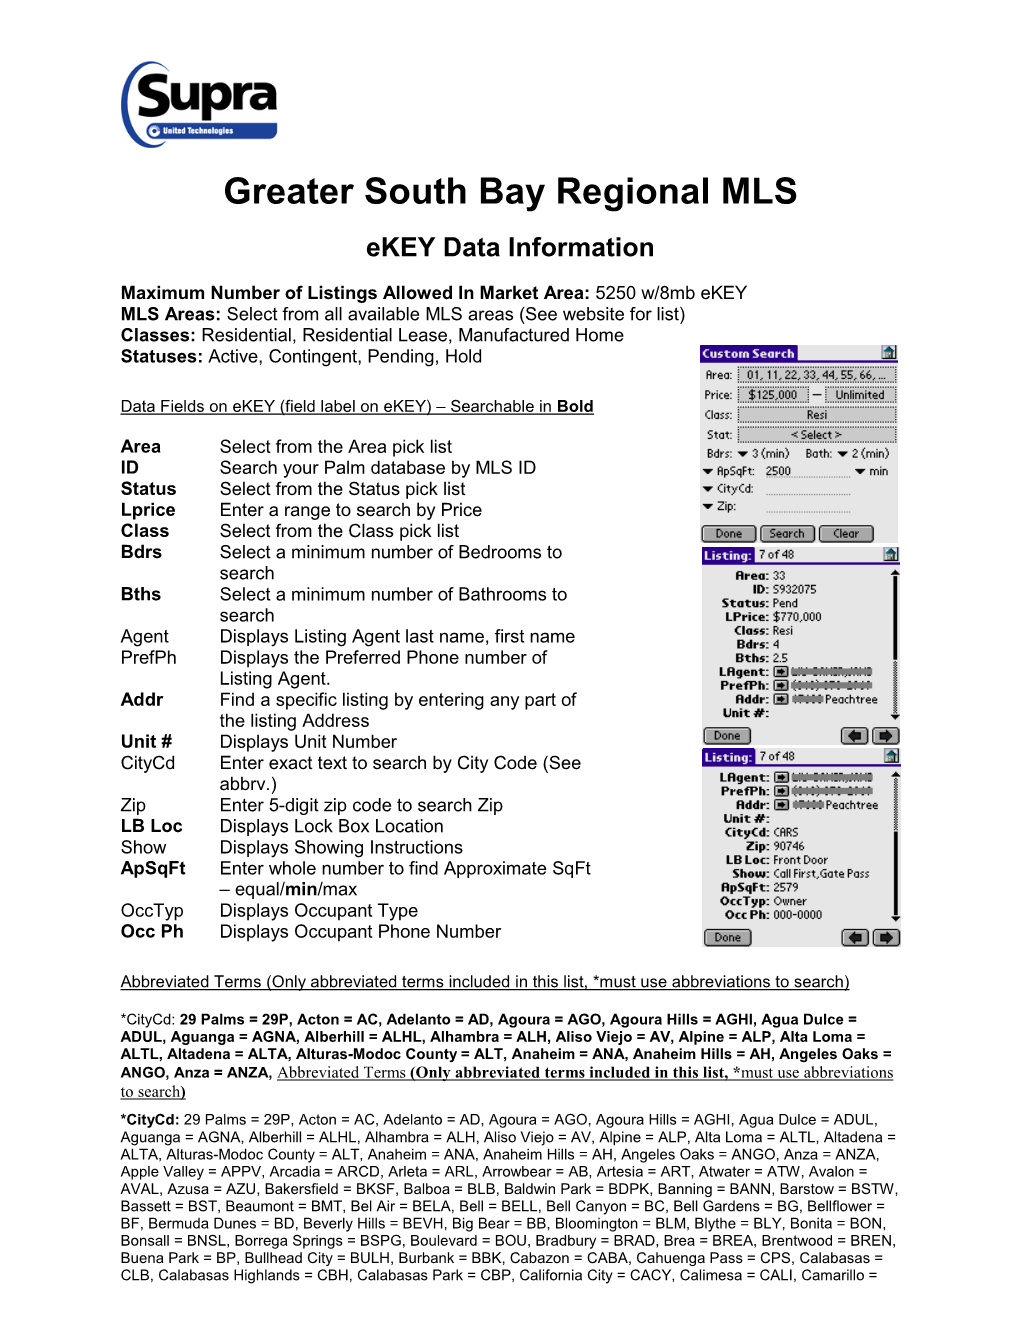 Greater South Bay Regional MLS Ekey Data Information